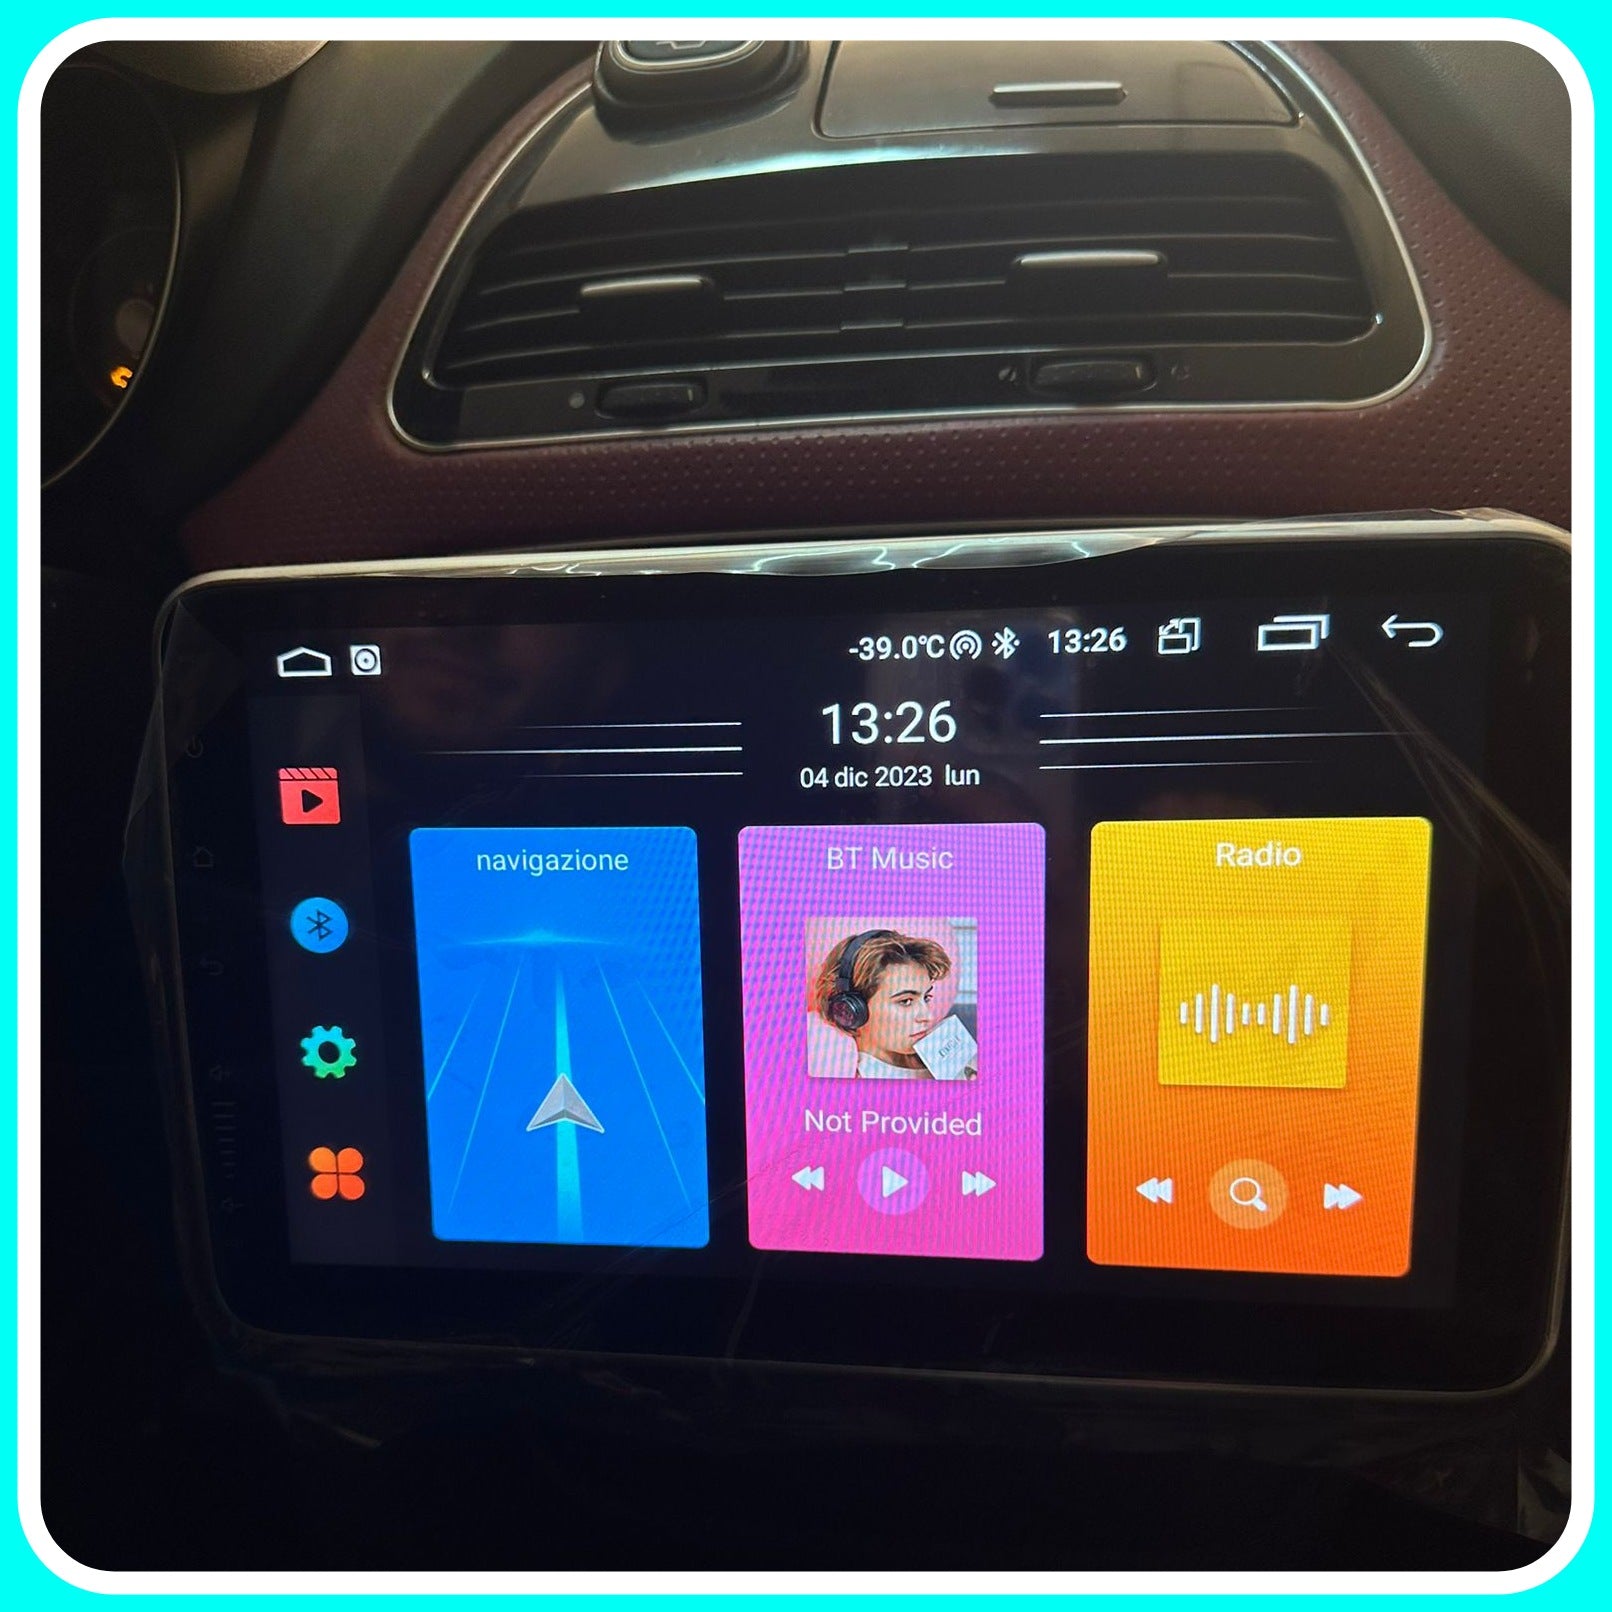 Autoradio per Fiat PUNTO EVO [2009 in Poi] - 1Din 10"Pollici Android, GPS, Bluetooth, Radio, Navigatore, Wifi, PlayStore